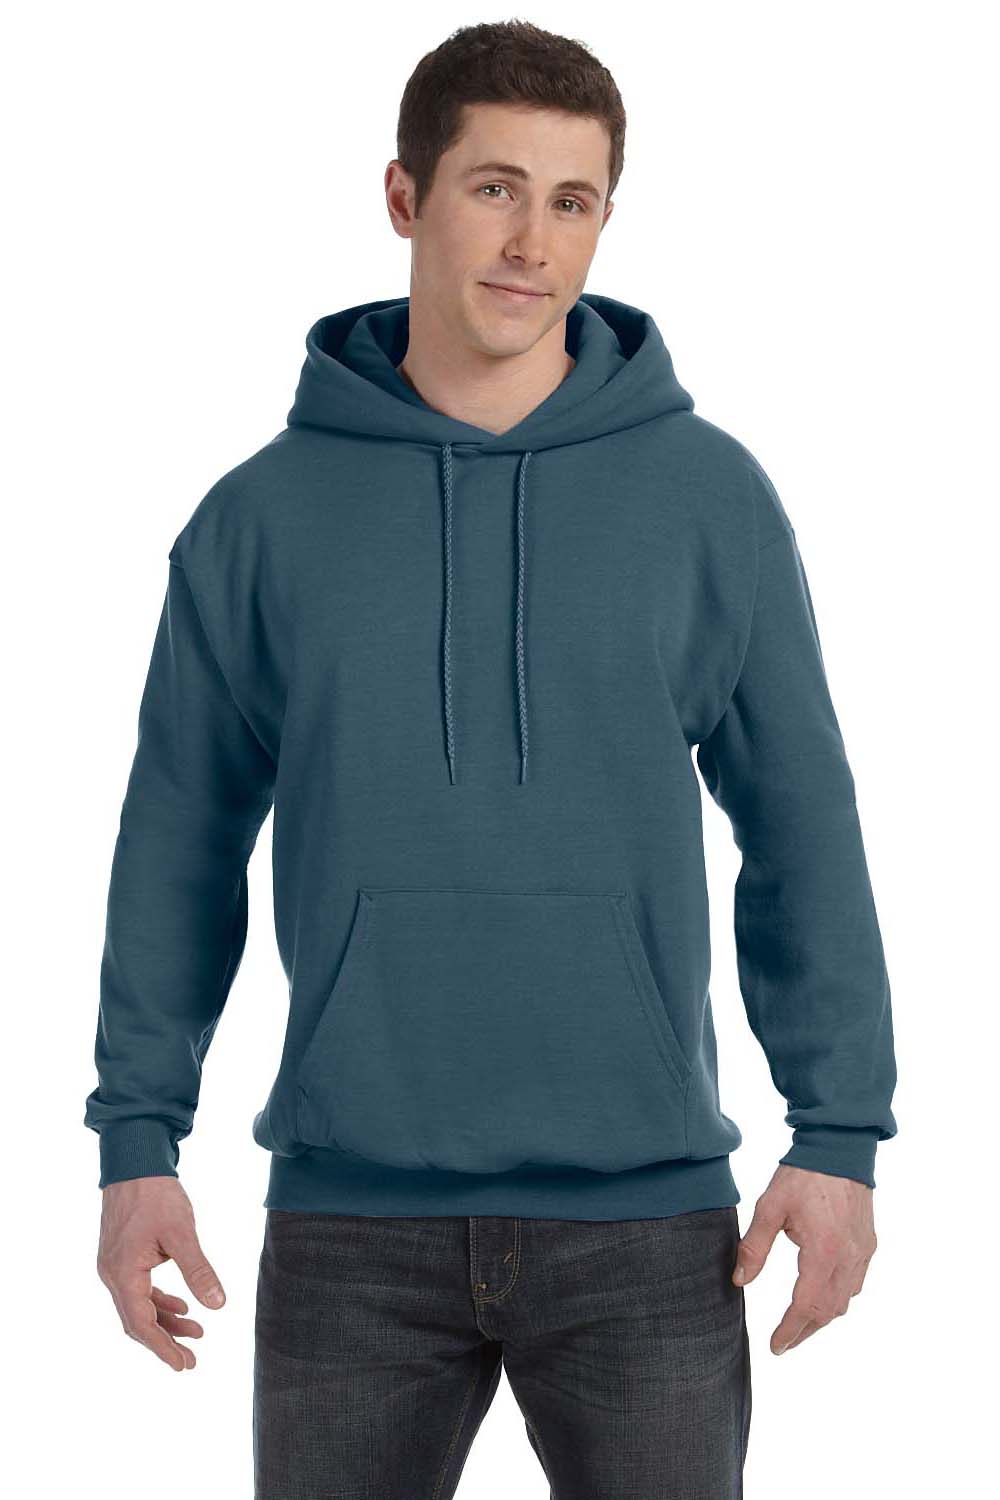 Hanes P170 Mens EcoSmart Print Pro XP Hooded Sweatshirt Hoodie Denim Blue Front